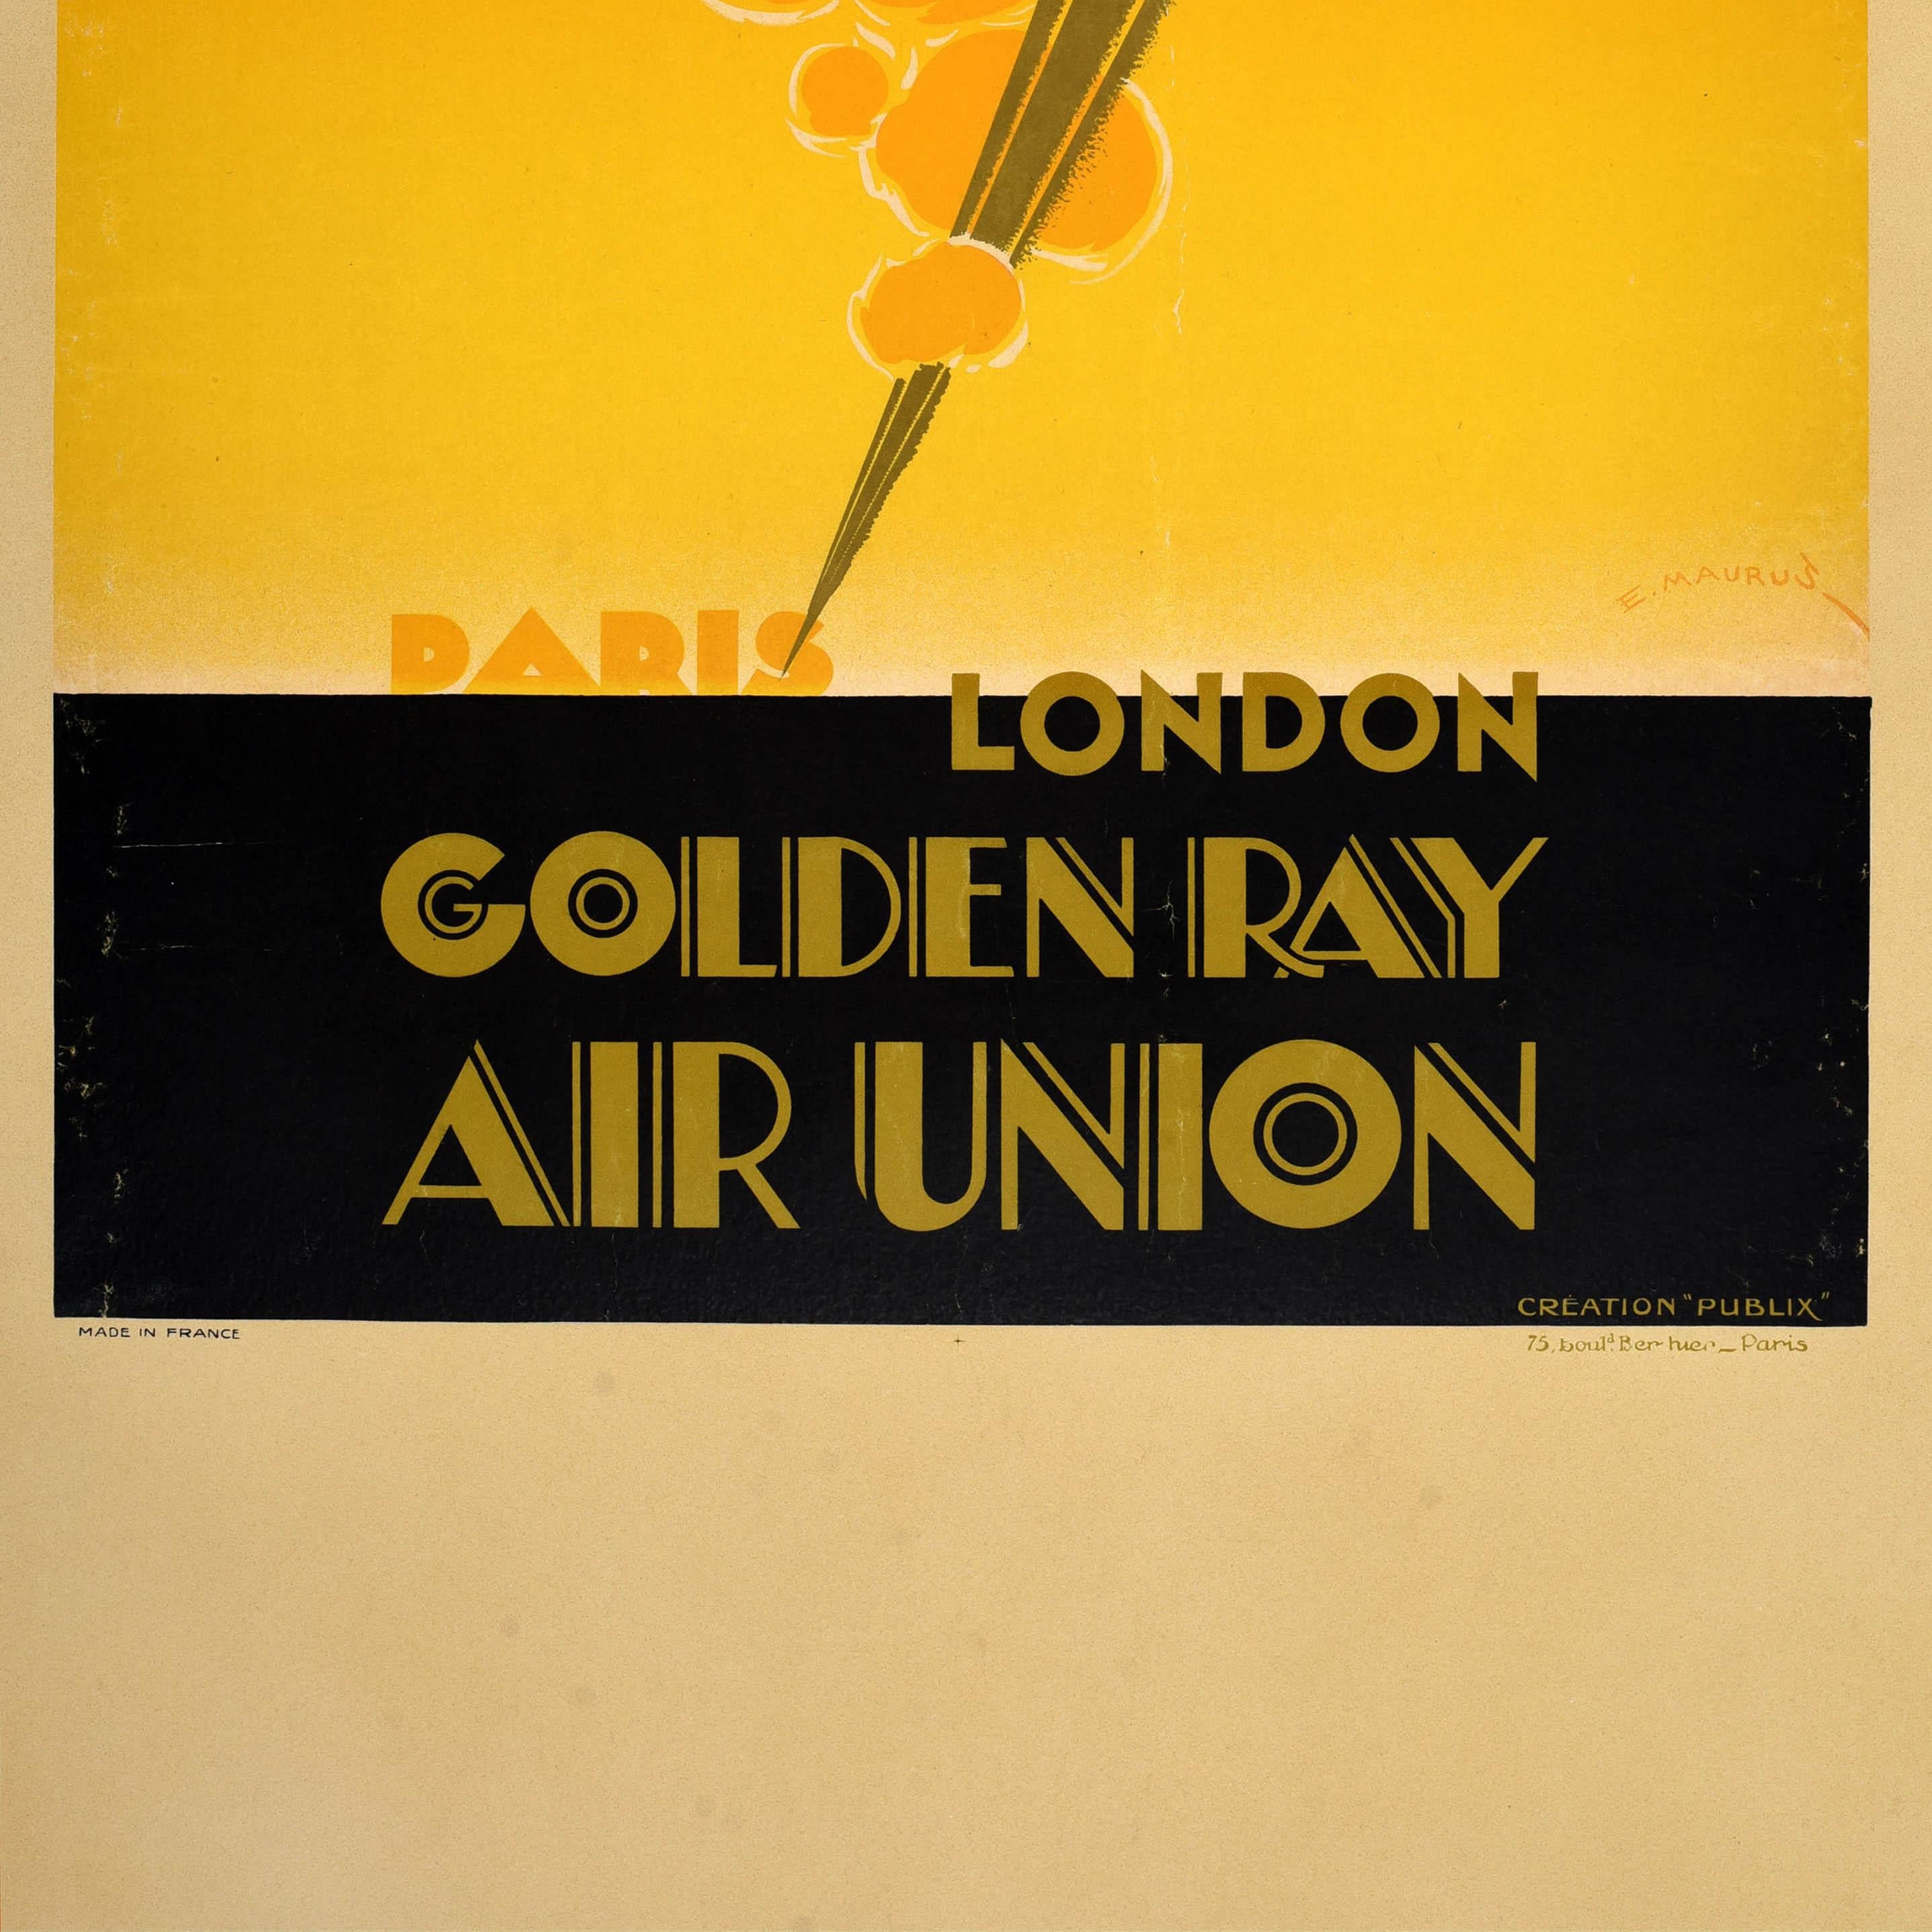 Mid-20th Century Original Vintage Travel Poster Golden Ray Air Union Paris London Art Deco Design